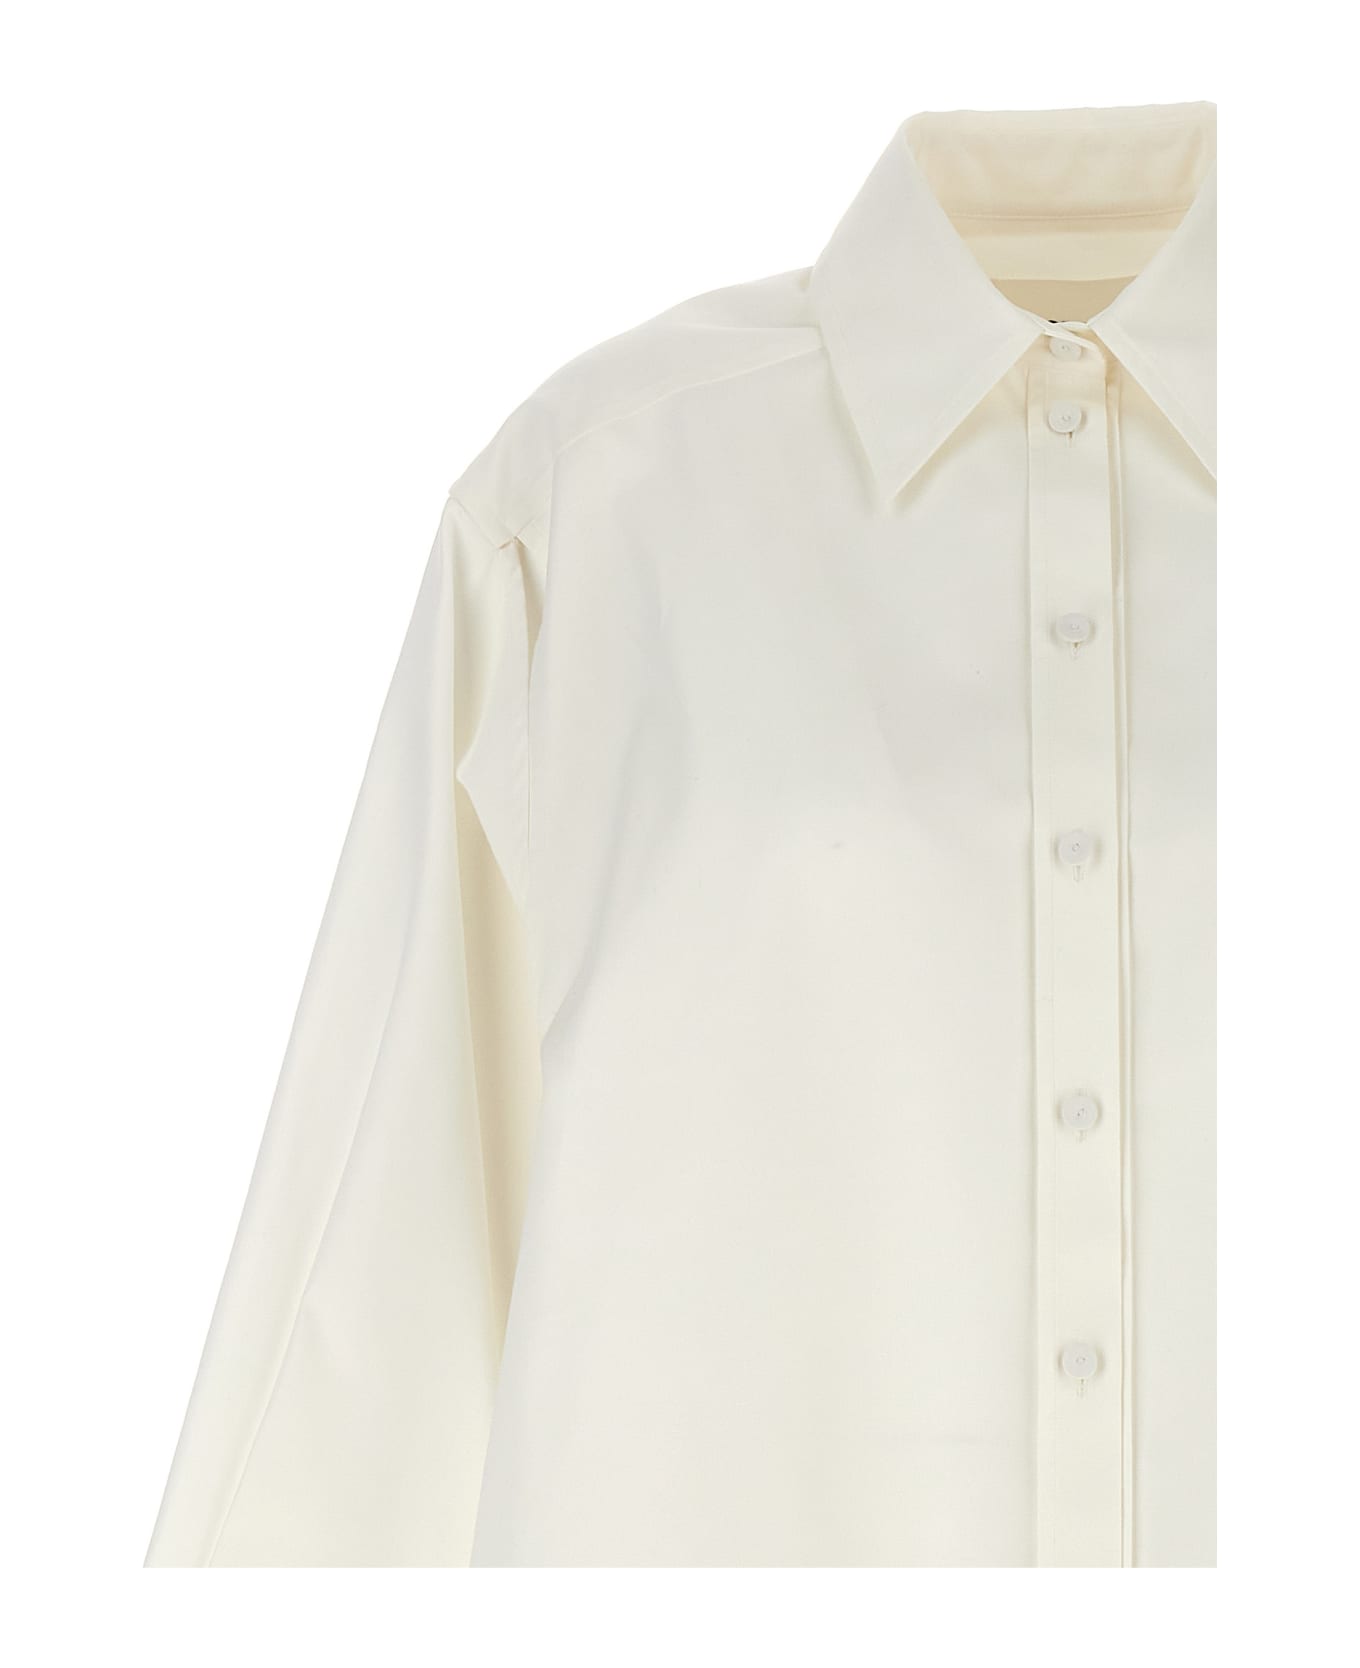 Jil Sander Cut-out Armholesque Shirt - White